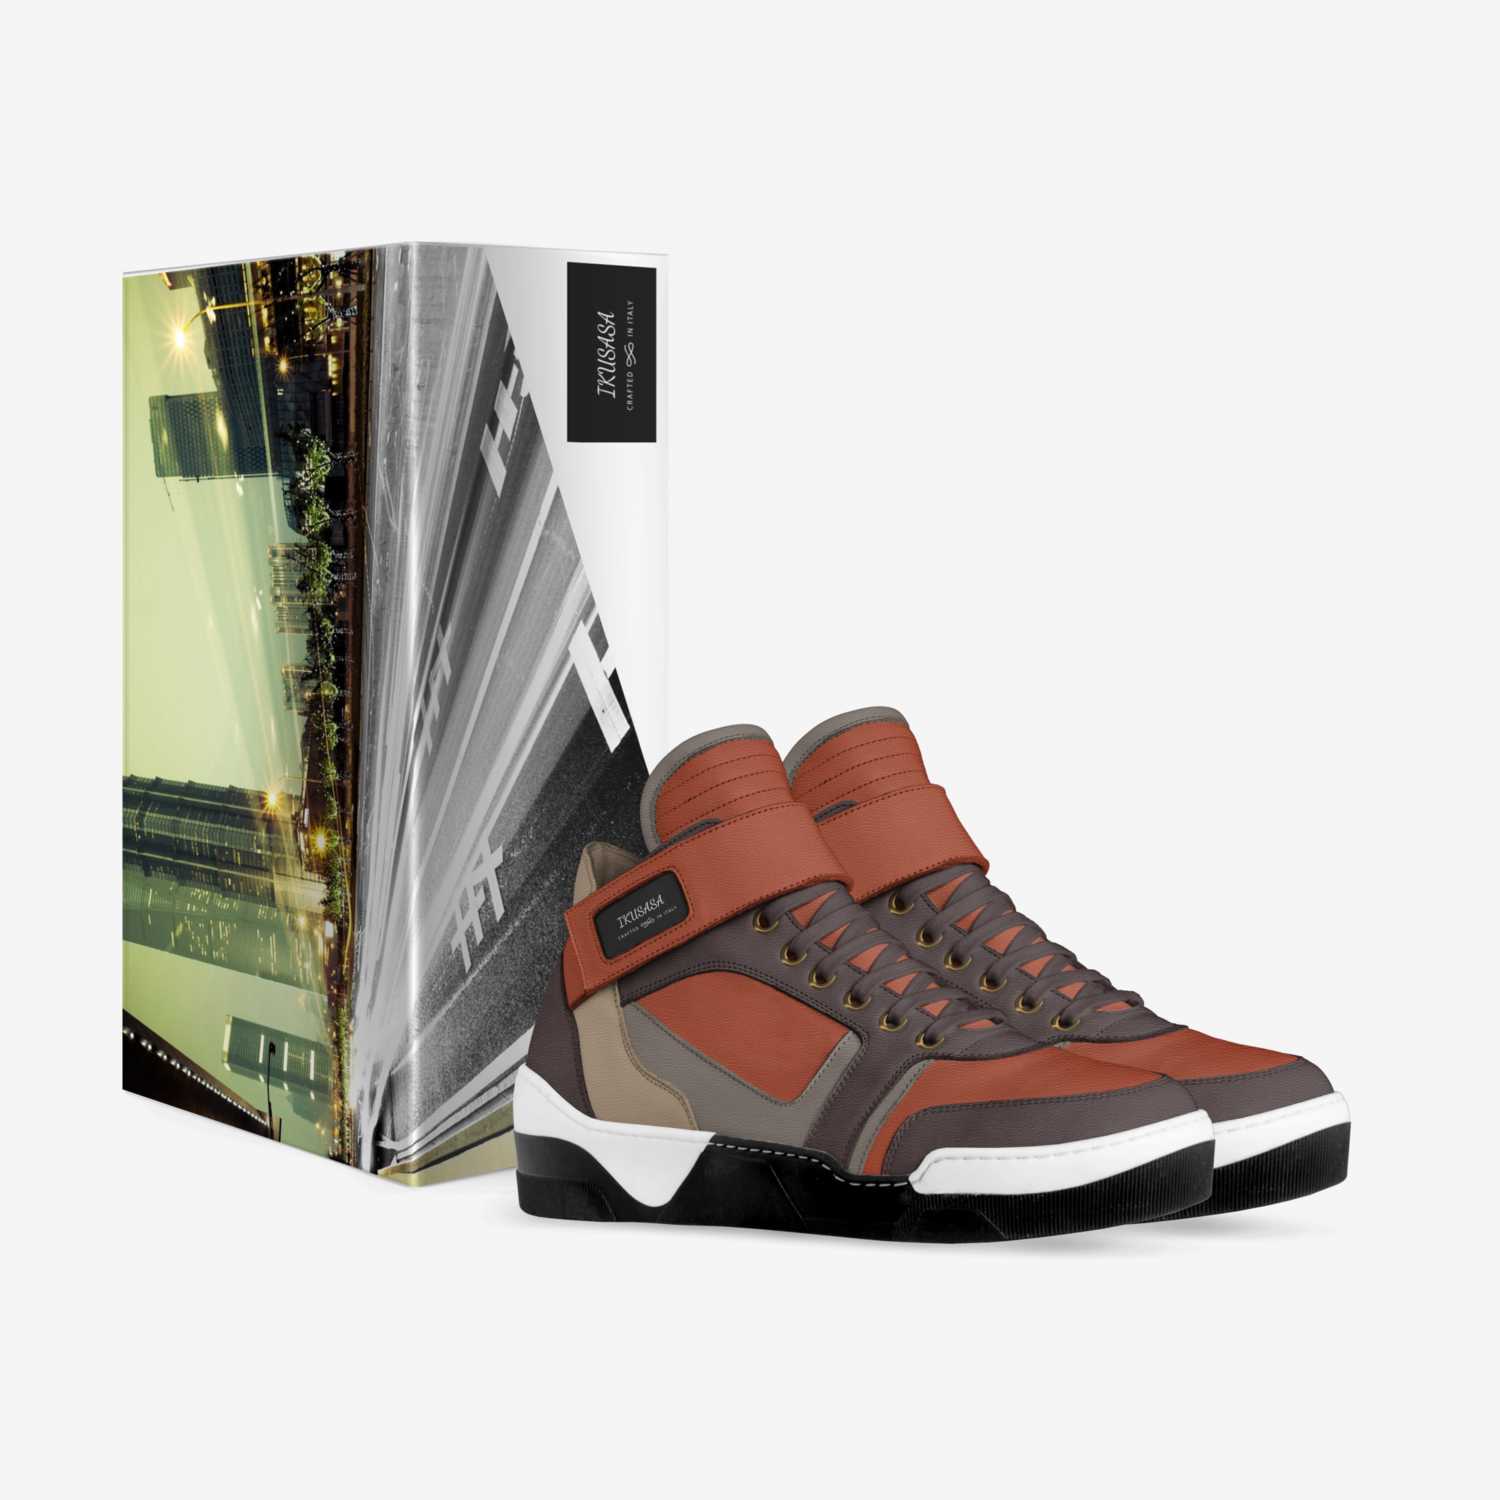 IKUSASA custom made in Italy shoes by Jennifer Brooks | Box view